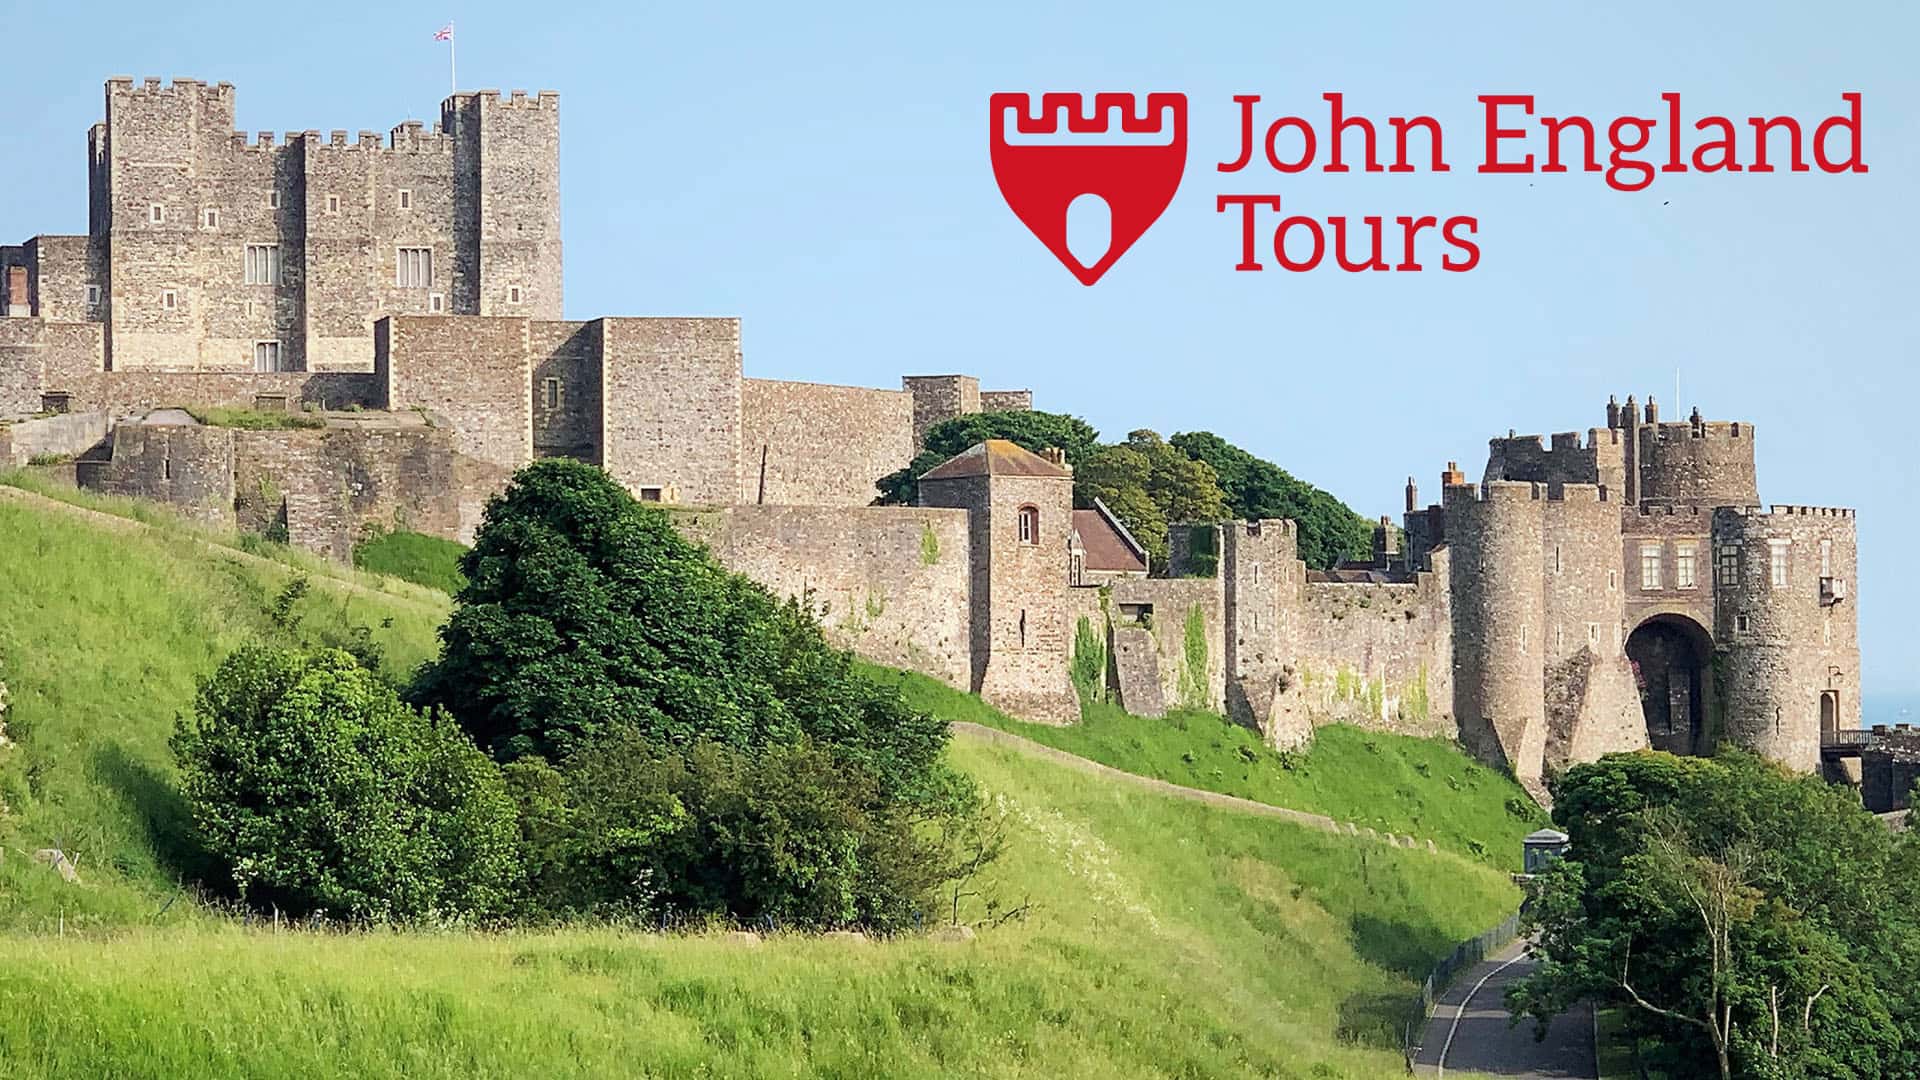 John England Tours